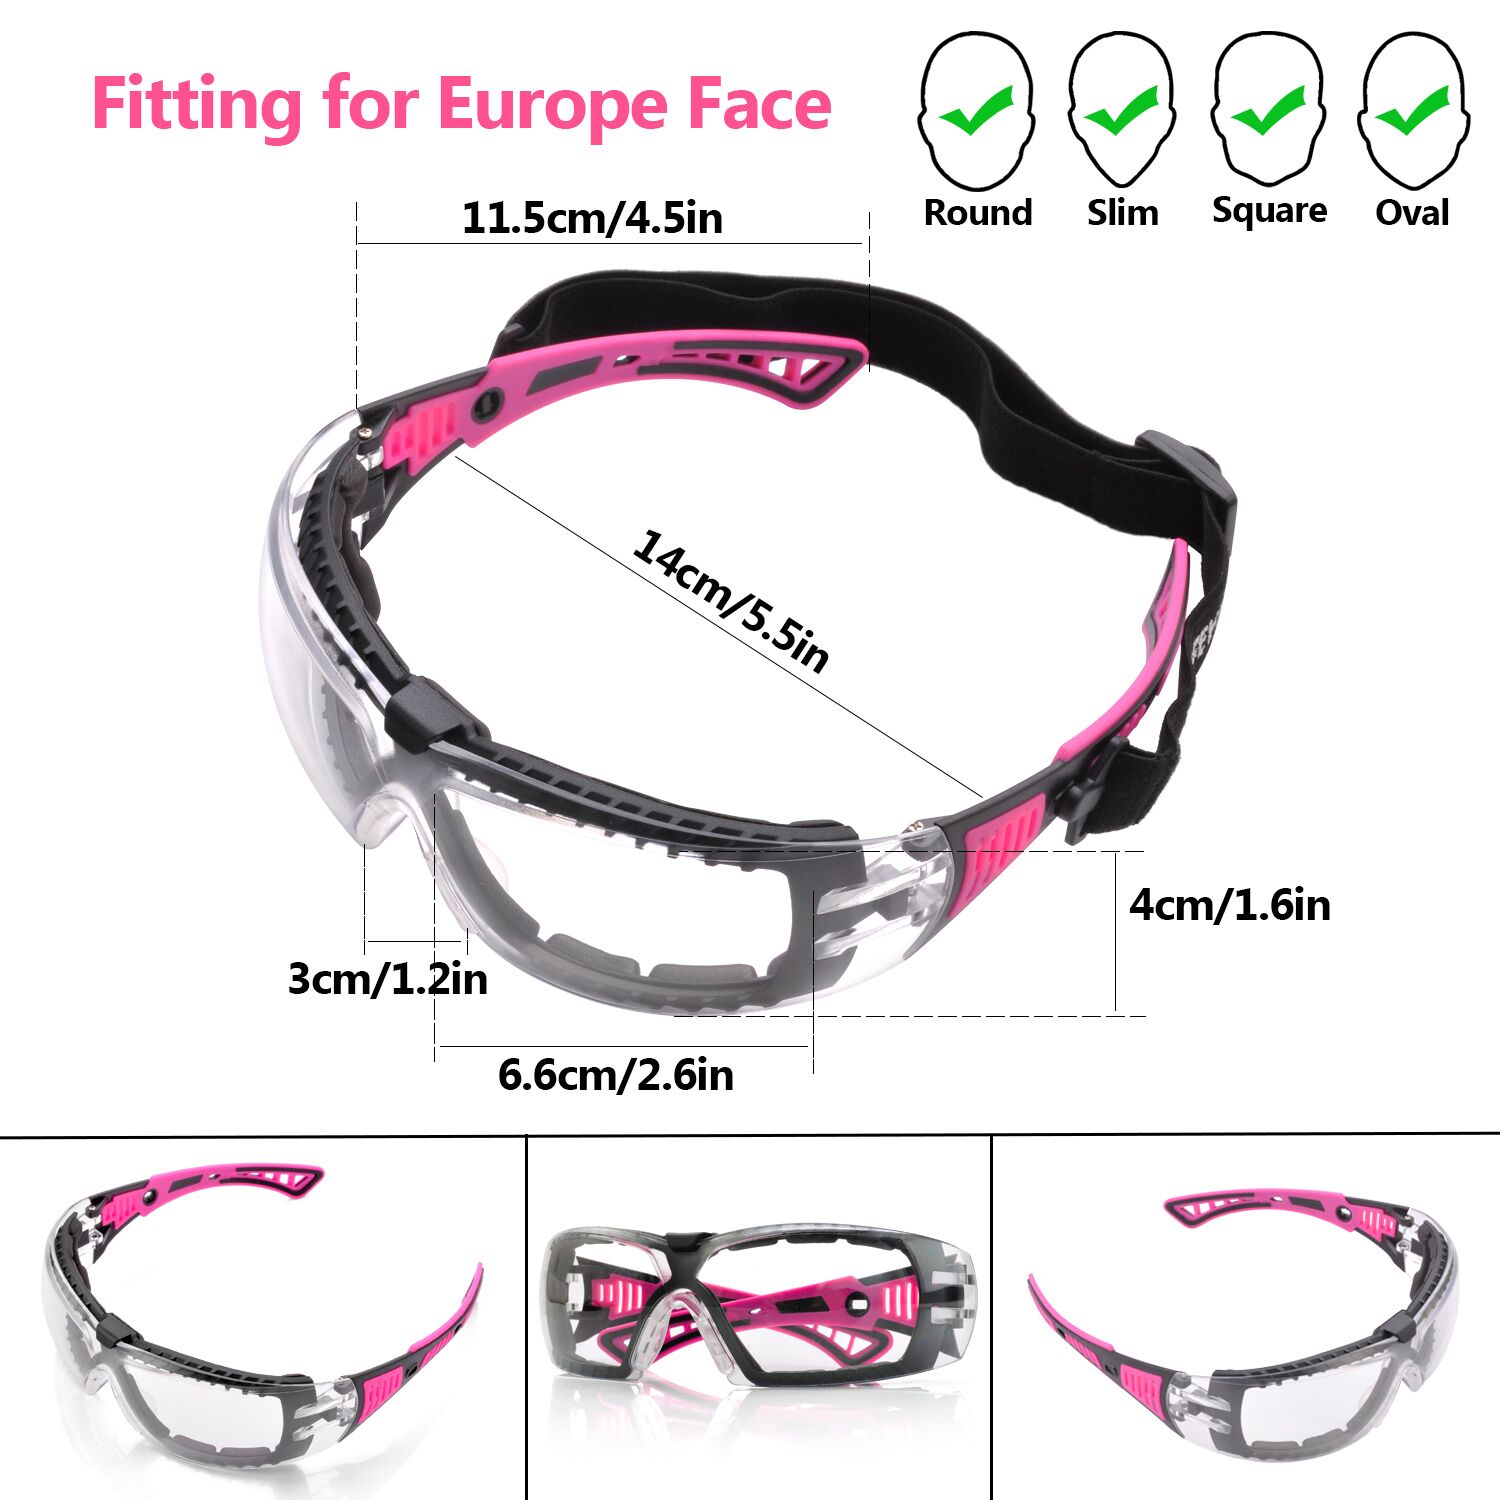 Ready Stock Anti Fog Lady Safety Glasses SG010